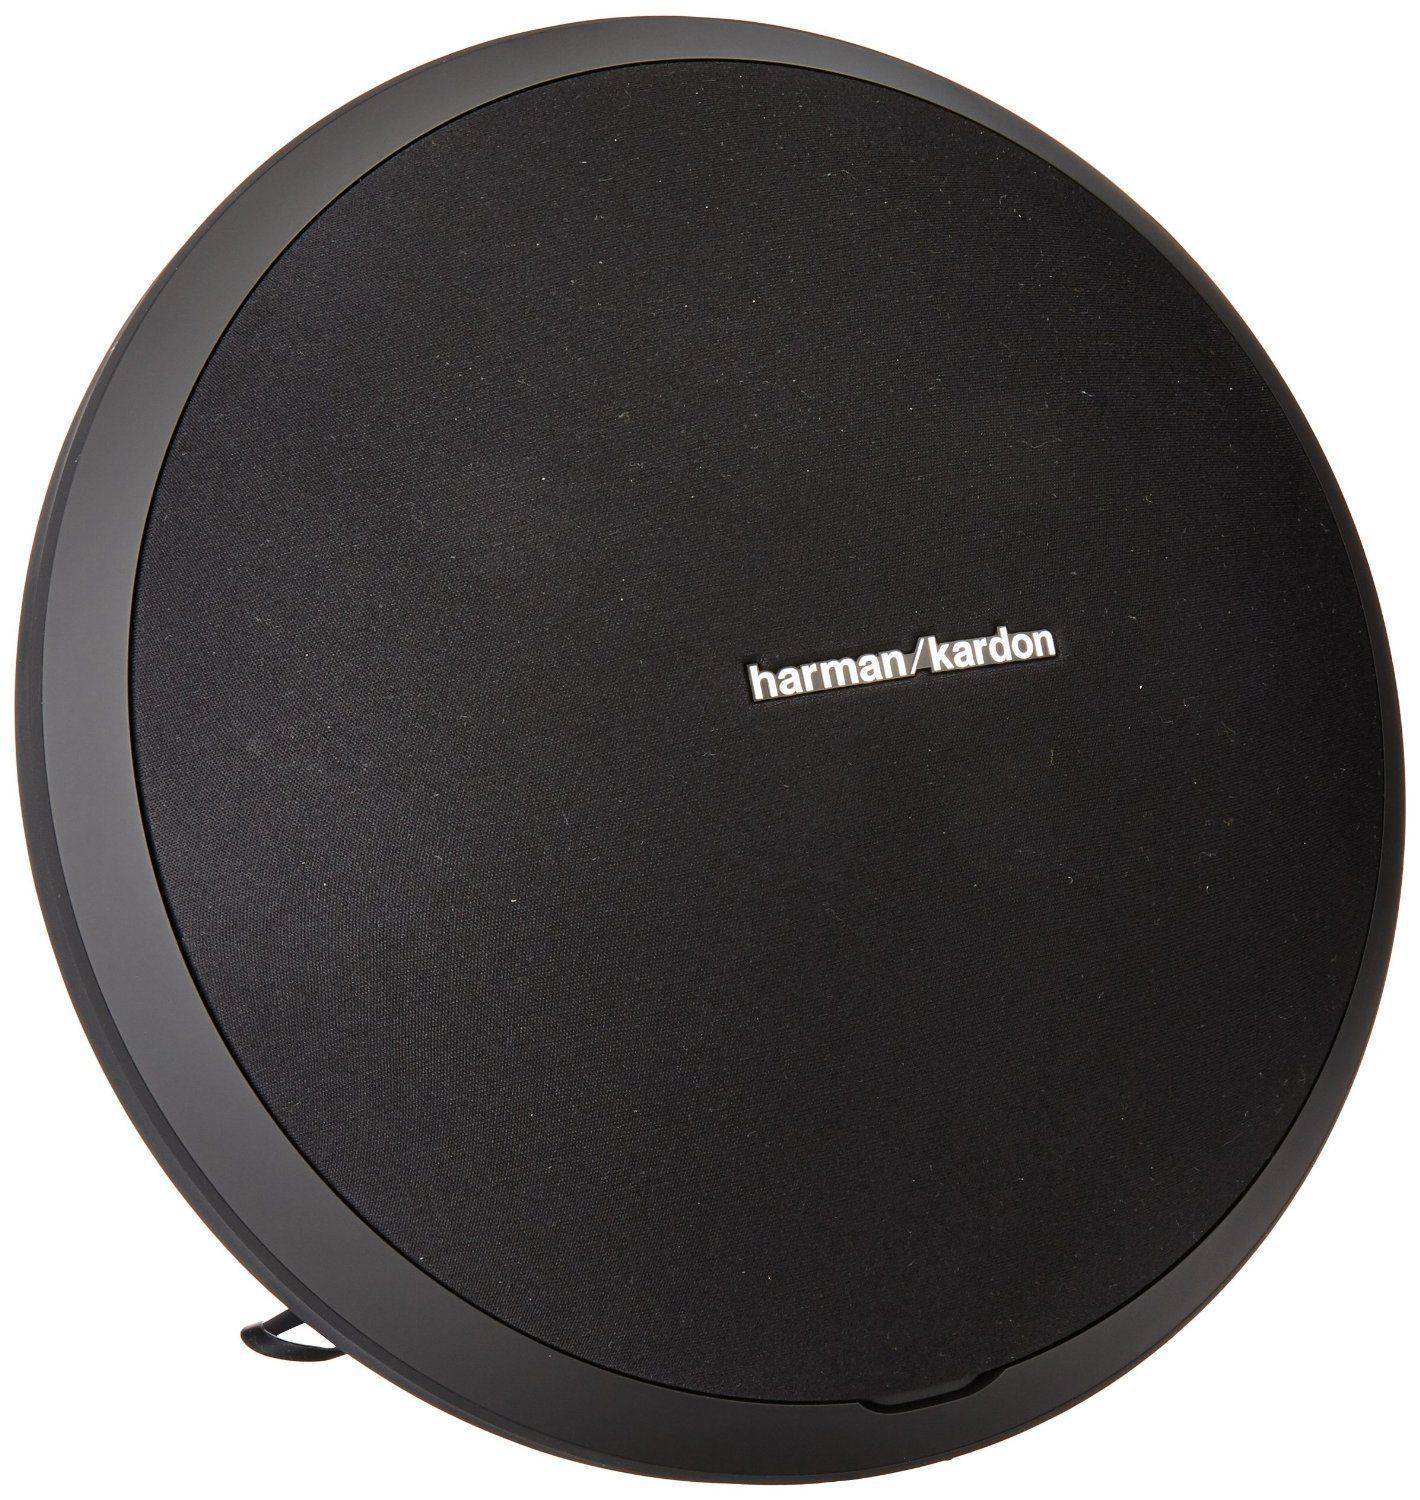 New Harman/Kardon Onyx Studio HighEnd Portable Bluetooth Speaker Black